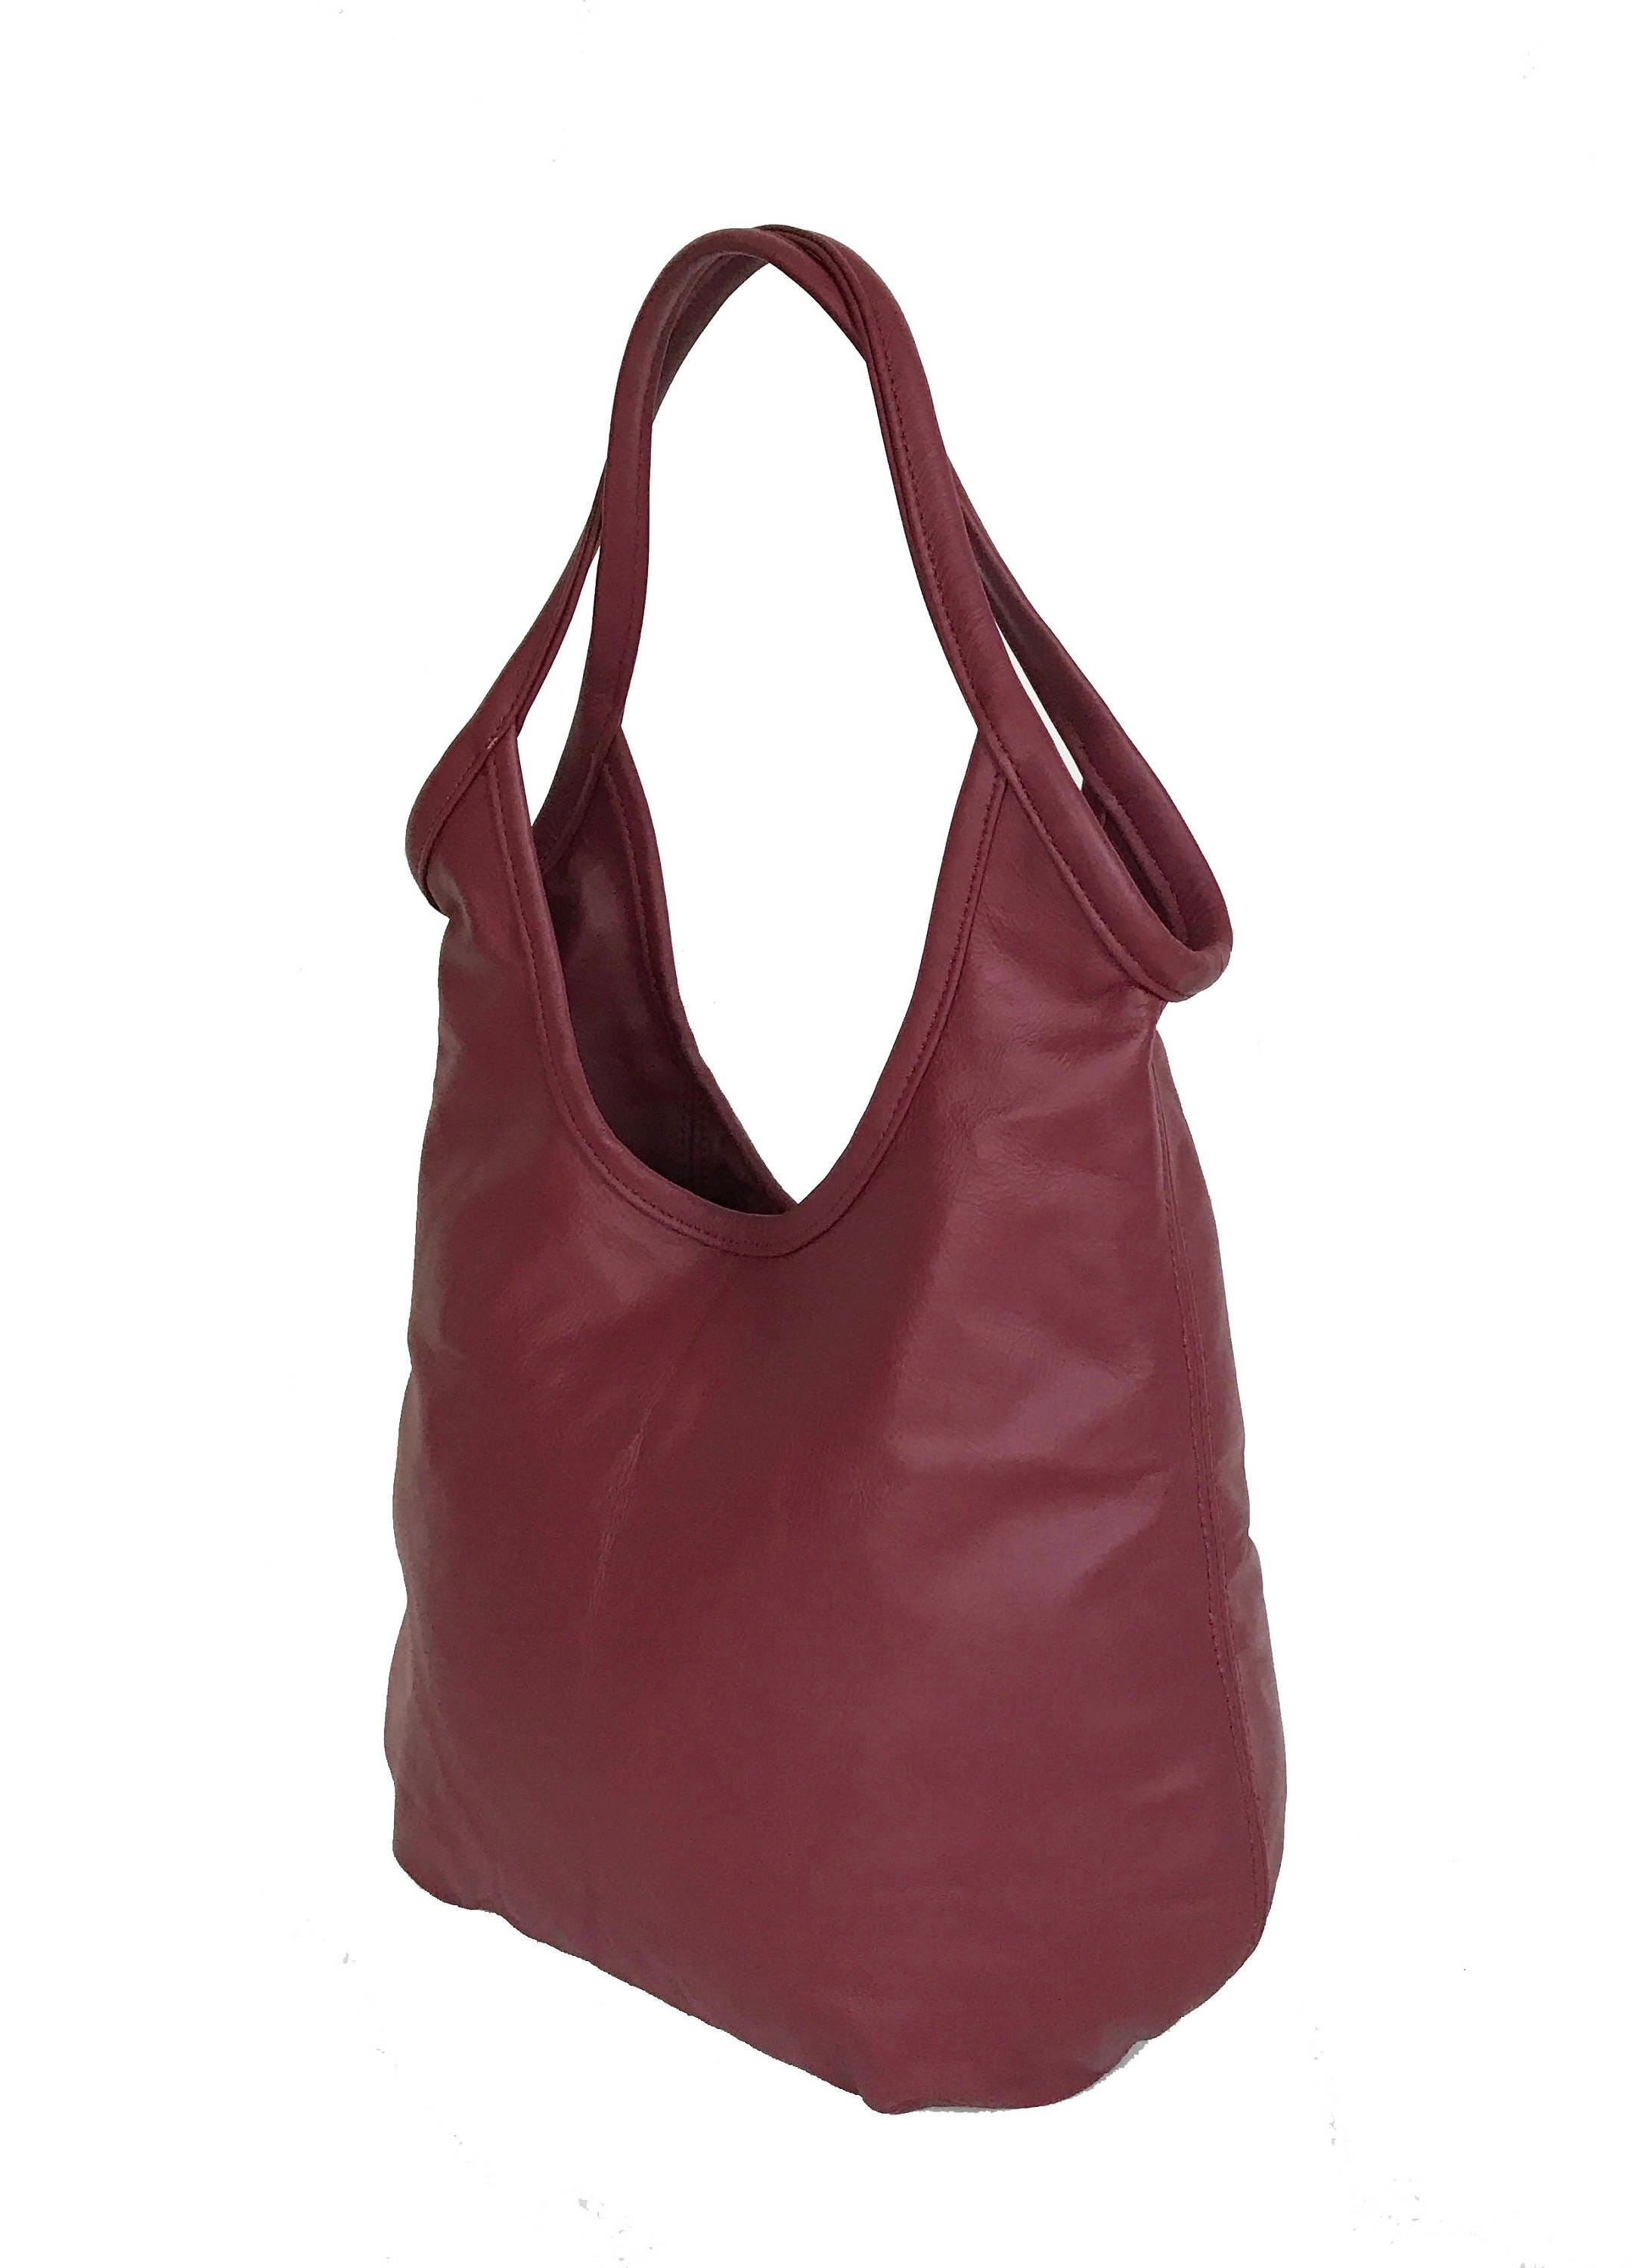 Leather Hobo Tote Bag Red Leather Handbag Everyday Bag | Etsy